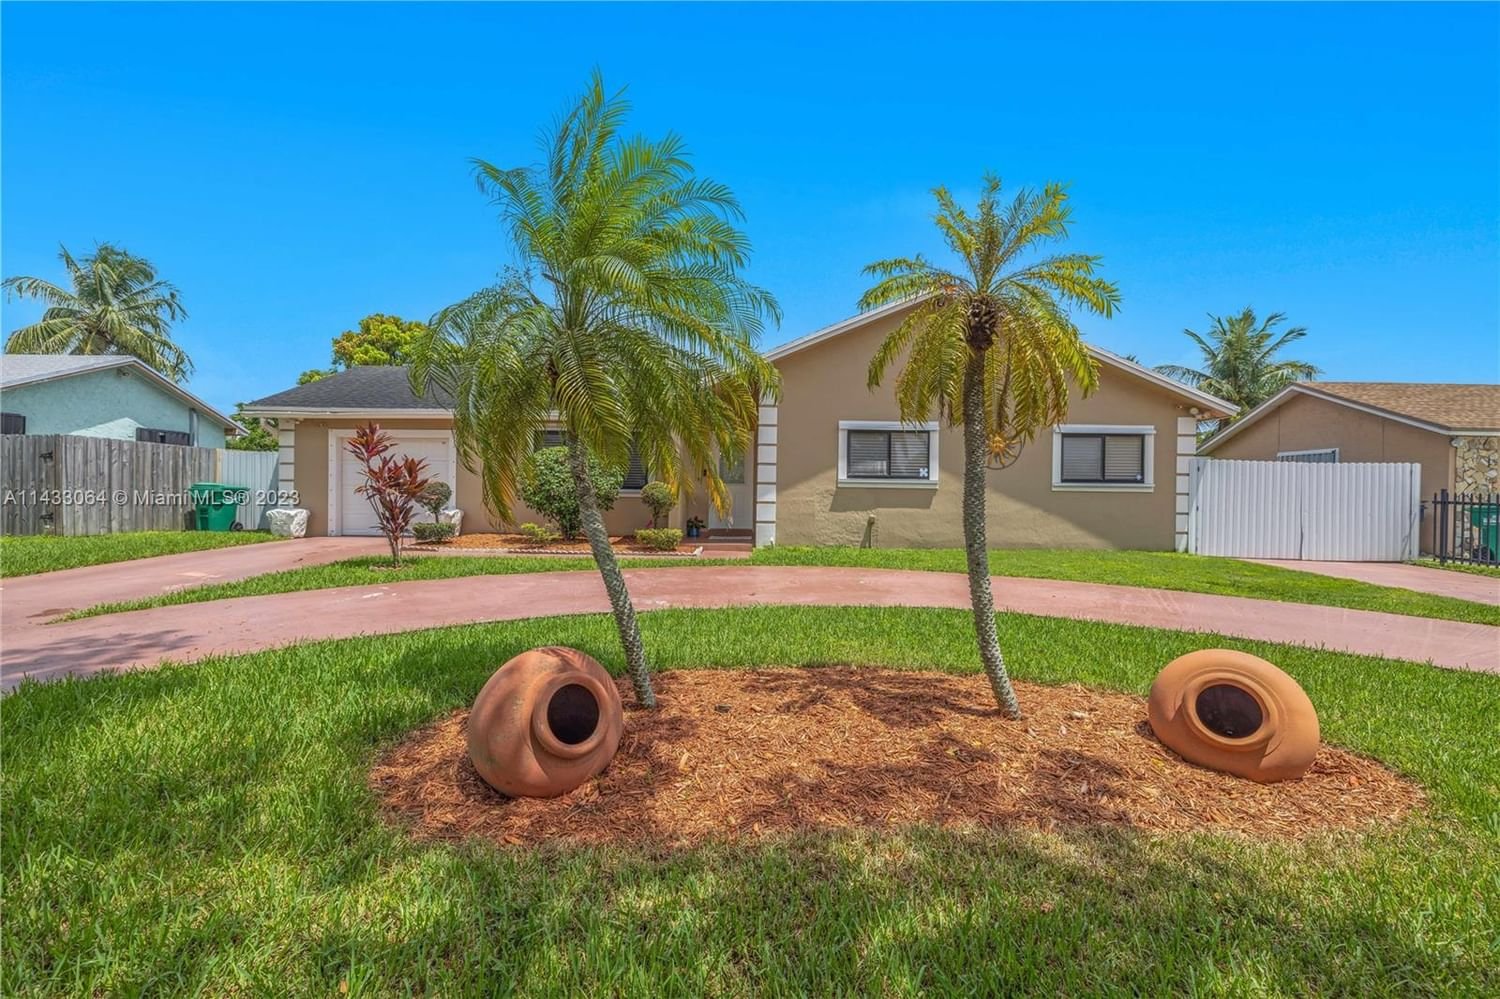 Real estate property located at 11525 170th St, Miami-Dade County, Miami, FL